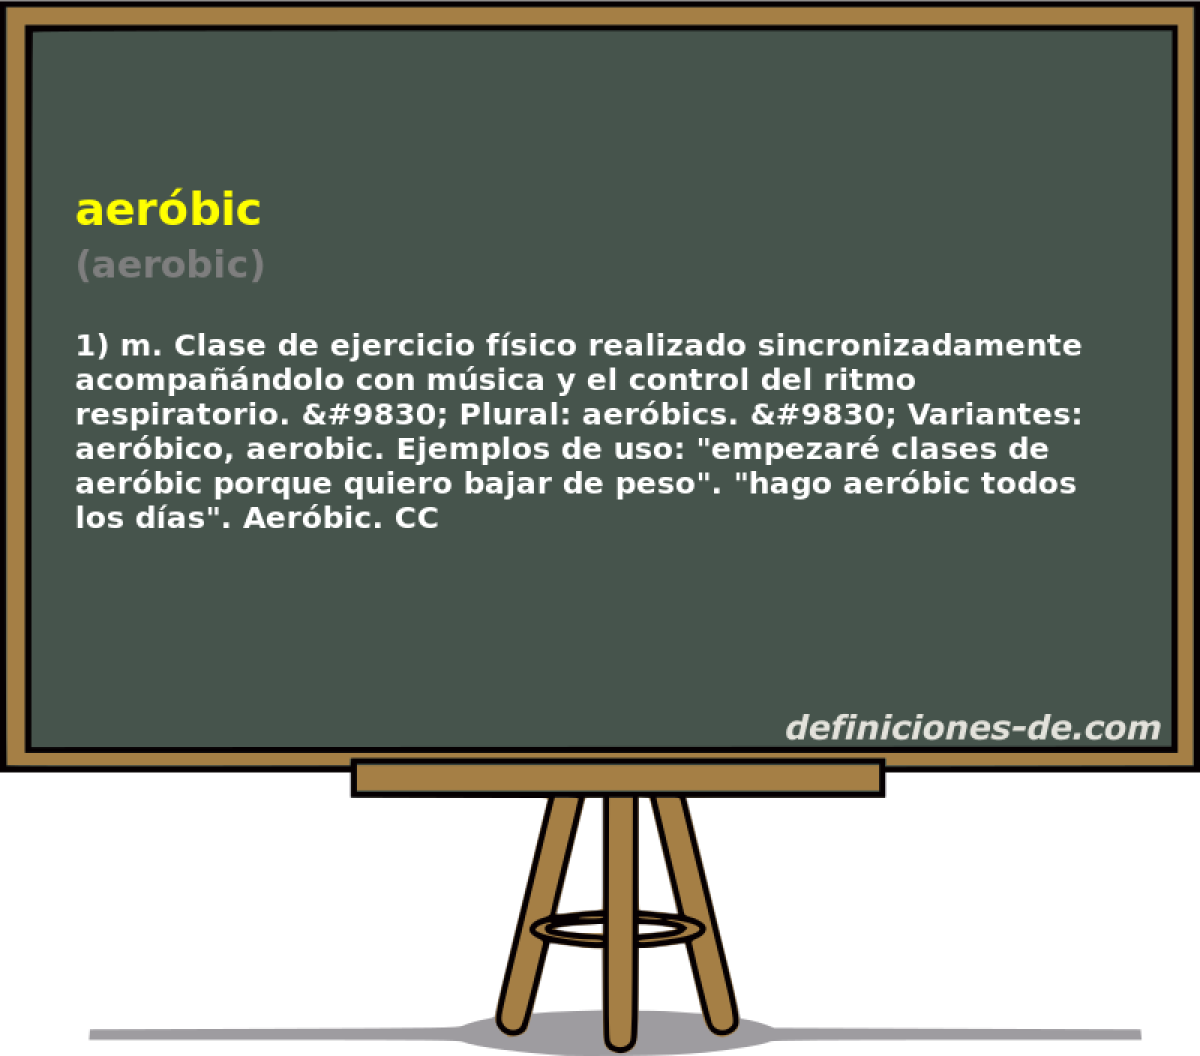 aerbic (aerobic)